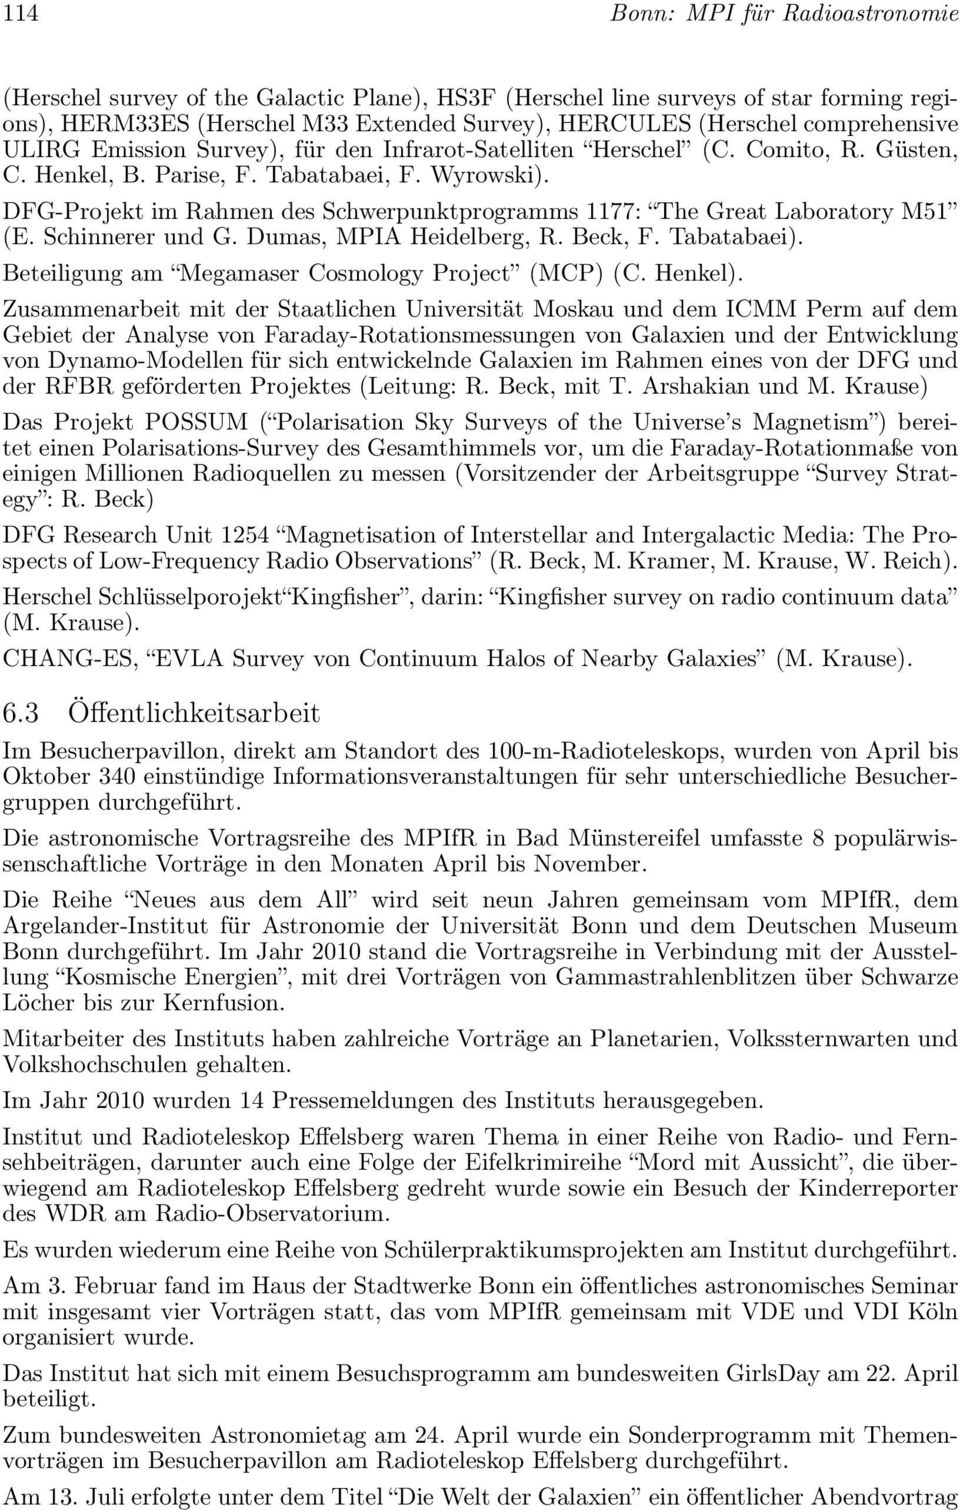 DFG-Projekt im Rahmen des Schwerpunktprogramms 1177: The Great Laboratory M51 (E. Schinnerer und G. Dumas, MPIA Heidelberg, R. Beck, F. Tabatabaei).